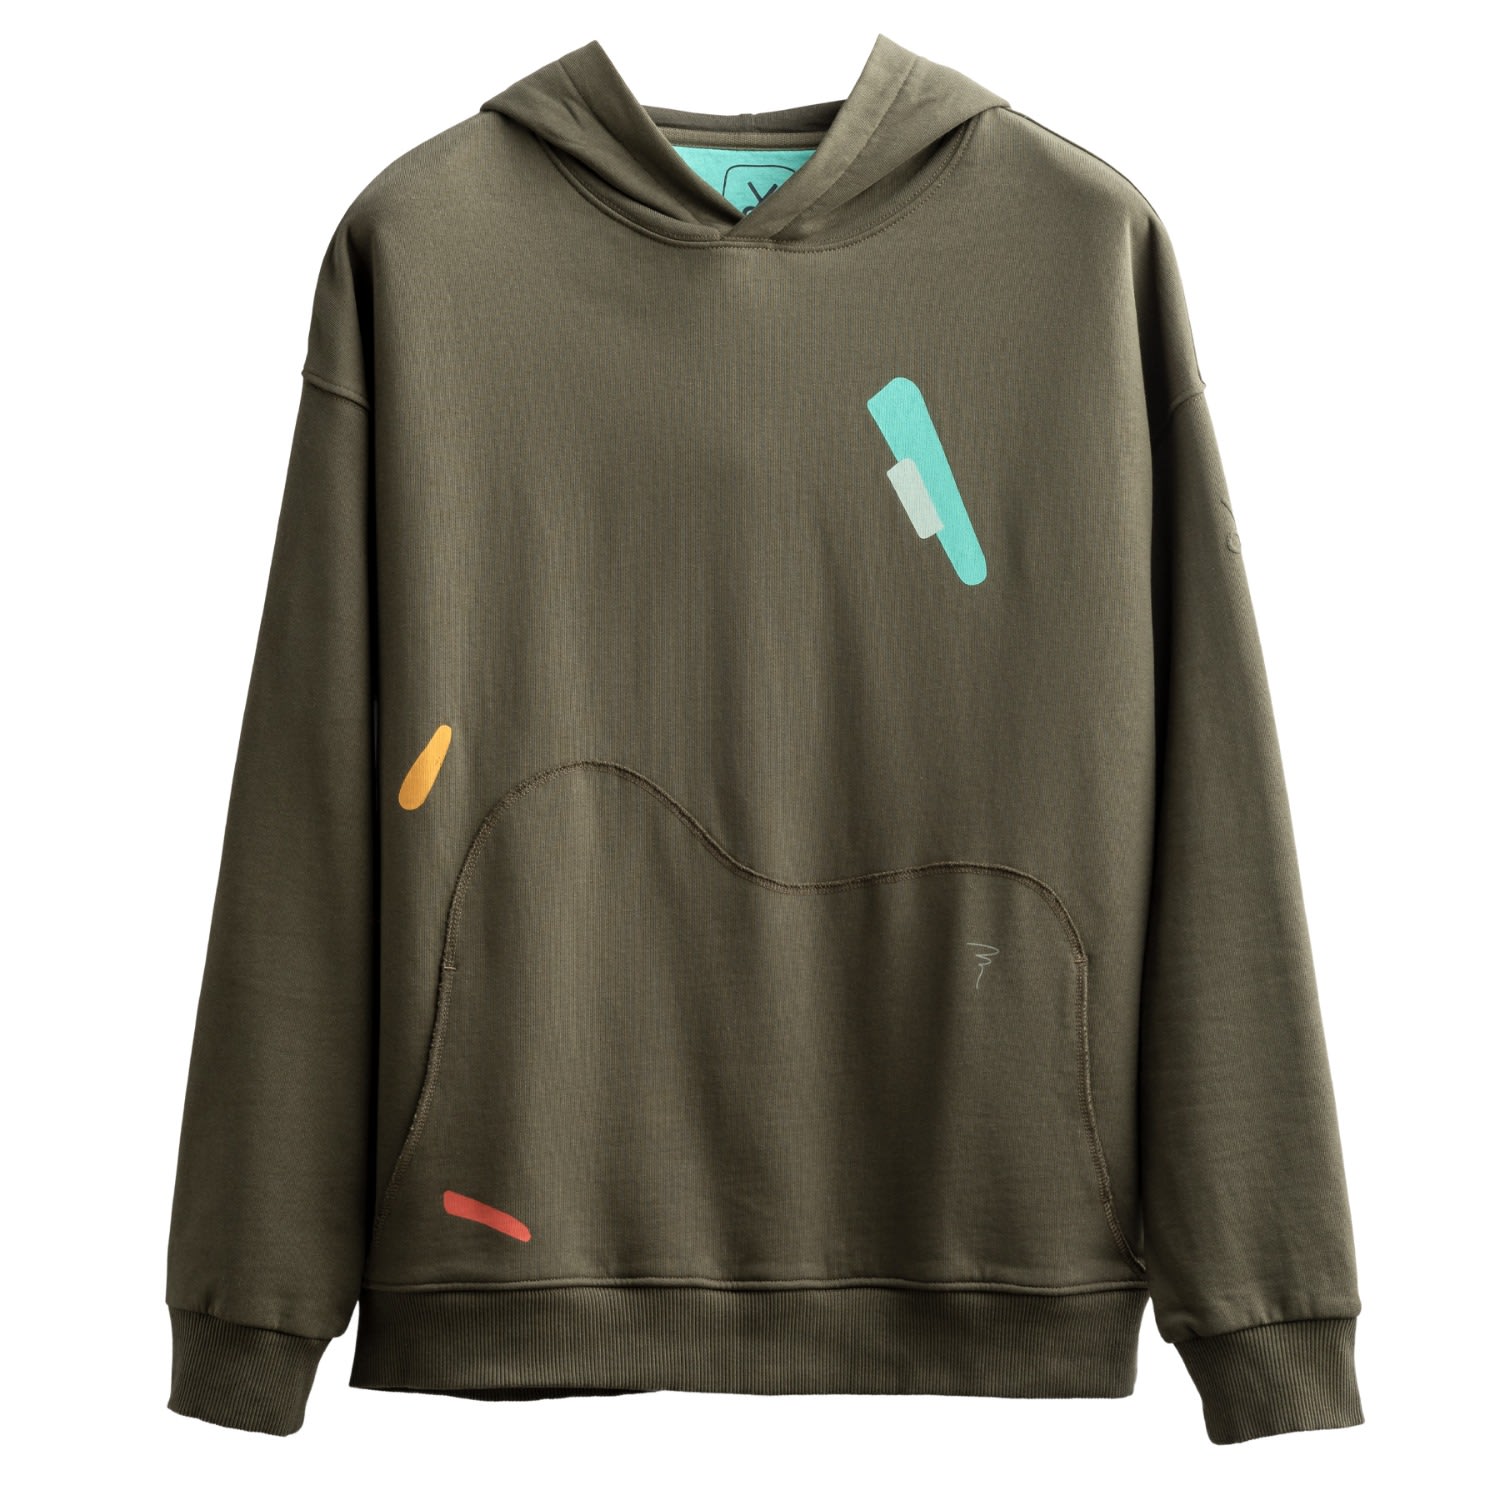 Men's Green Unisex Design Hoodie Sweatshirt - Apenda - Jungle Extra Small KAFT